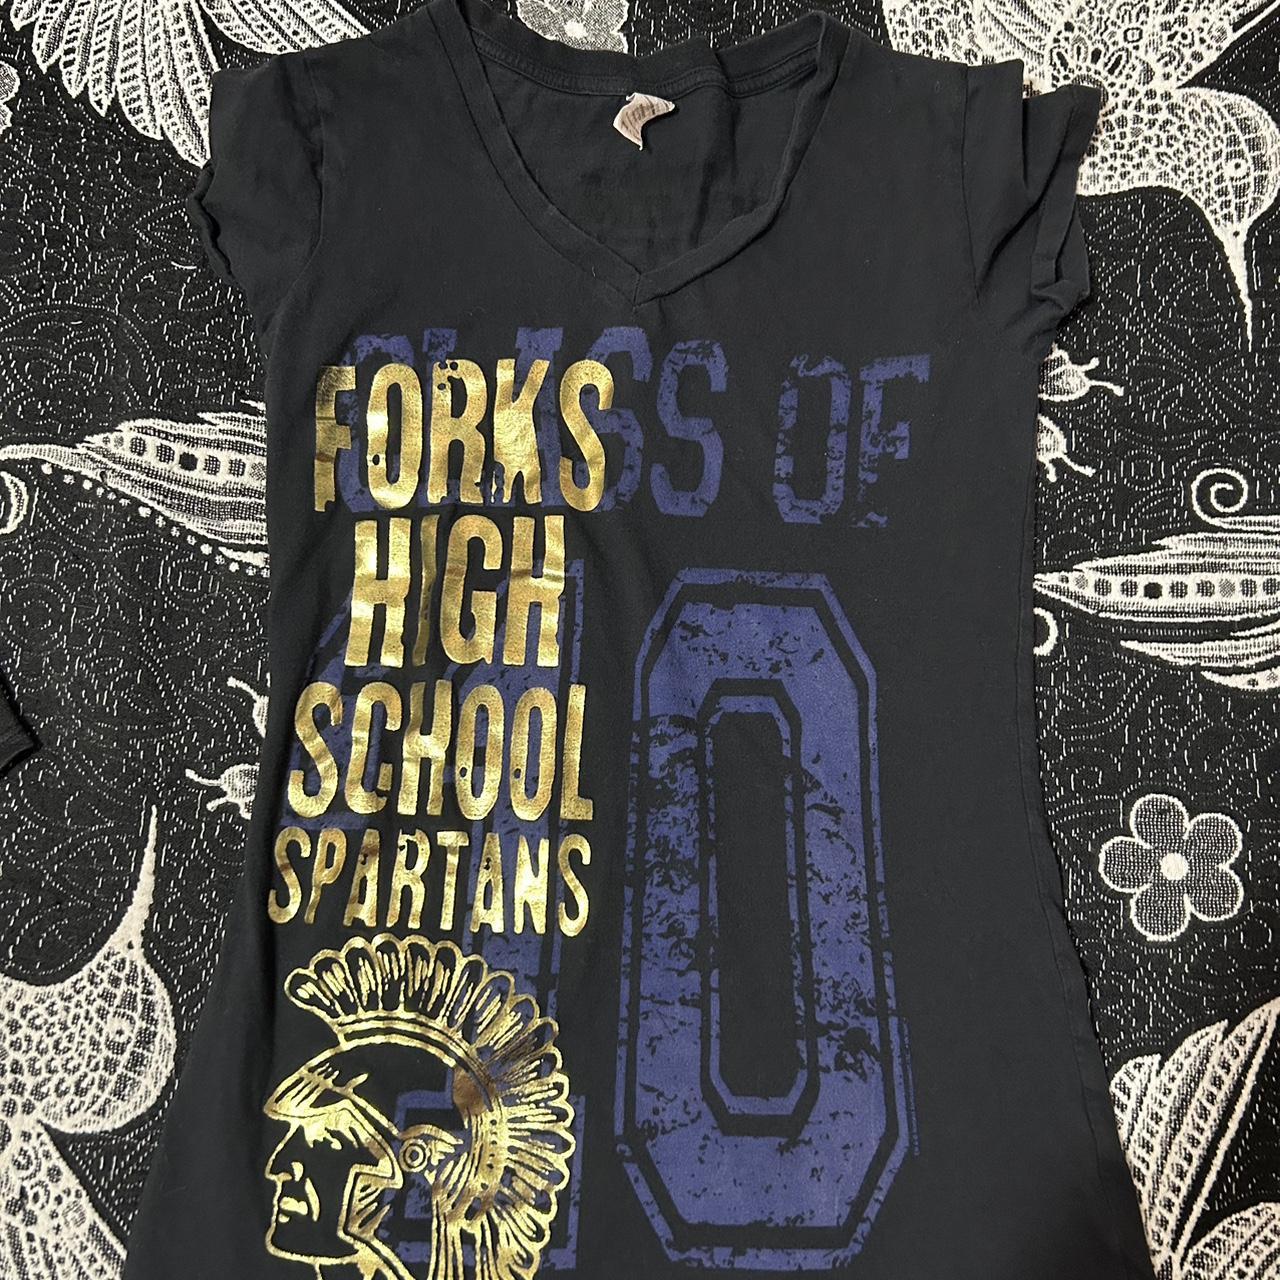 SCHOOL SPIRIT SHIRTS, Retro font shirts in Black or Grey